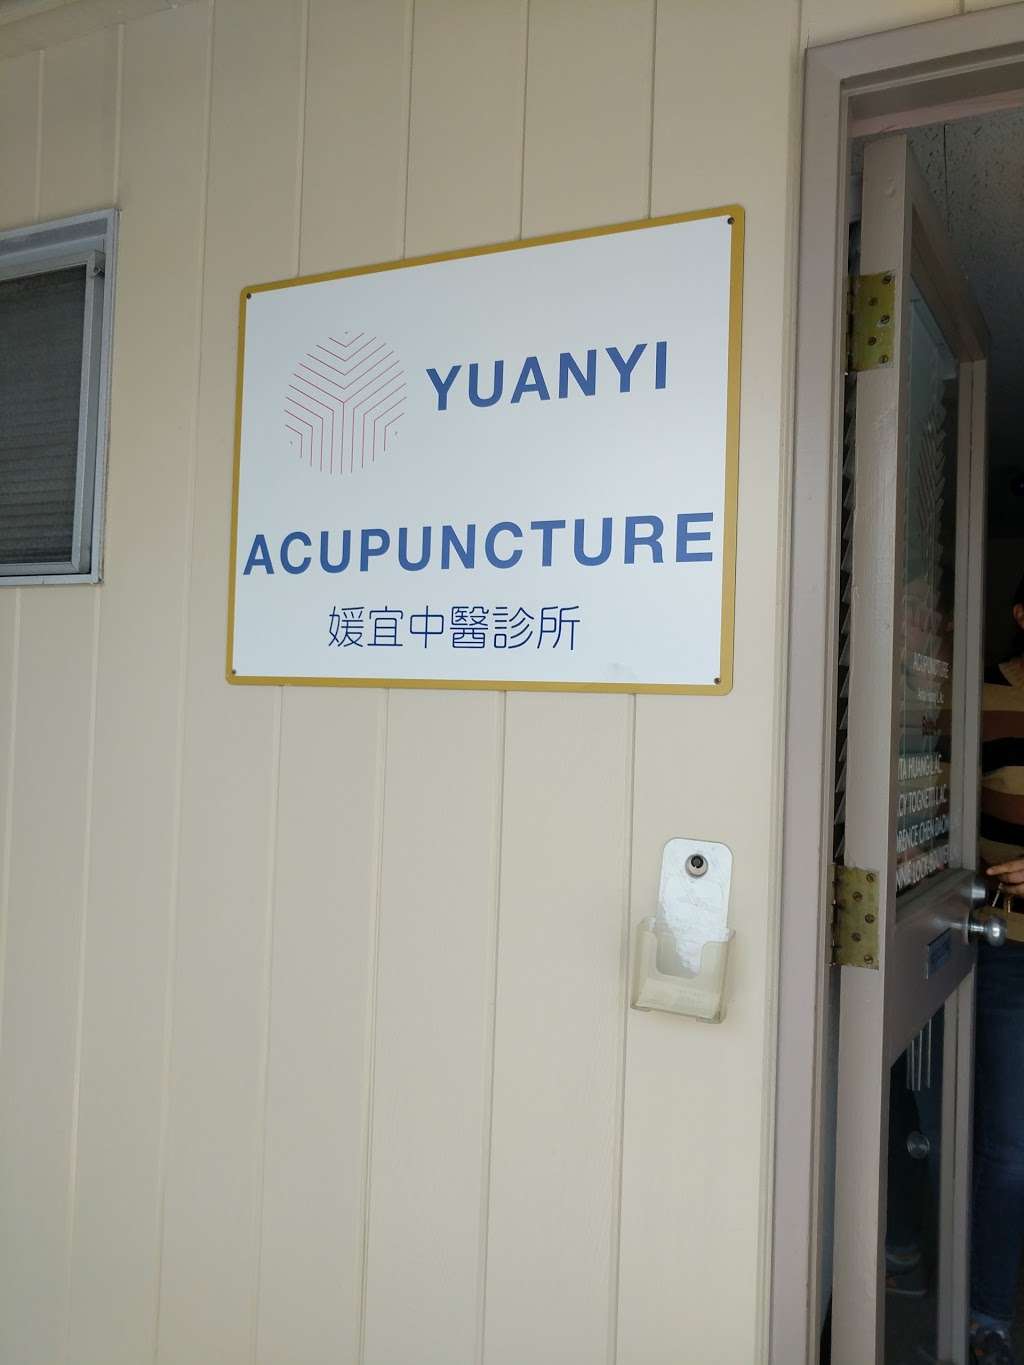 Yuanyi Acupuncture | United States, California, San Mateo, 101 North El Camino Real suite 4邮政编码: 94401 | Phone: (650) 342-8880